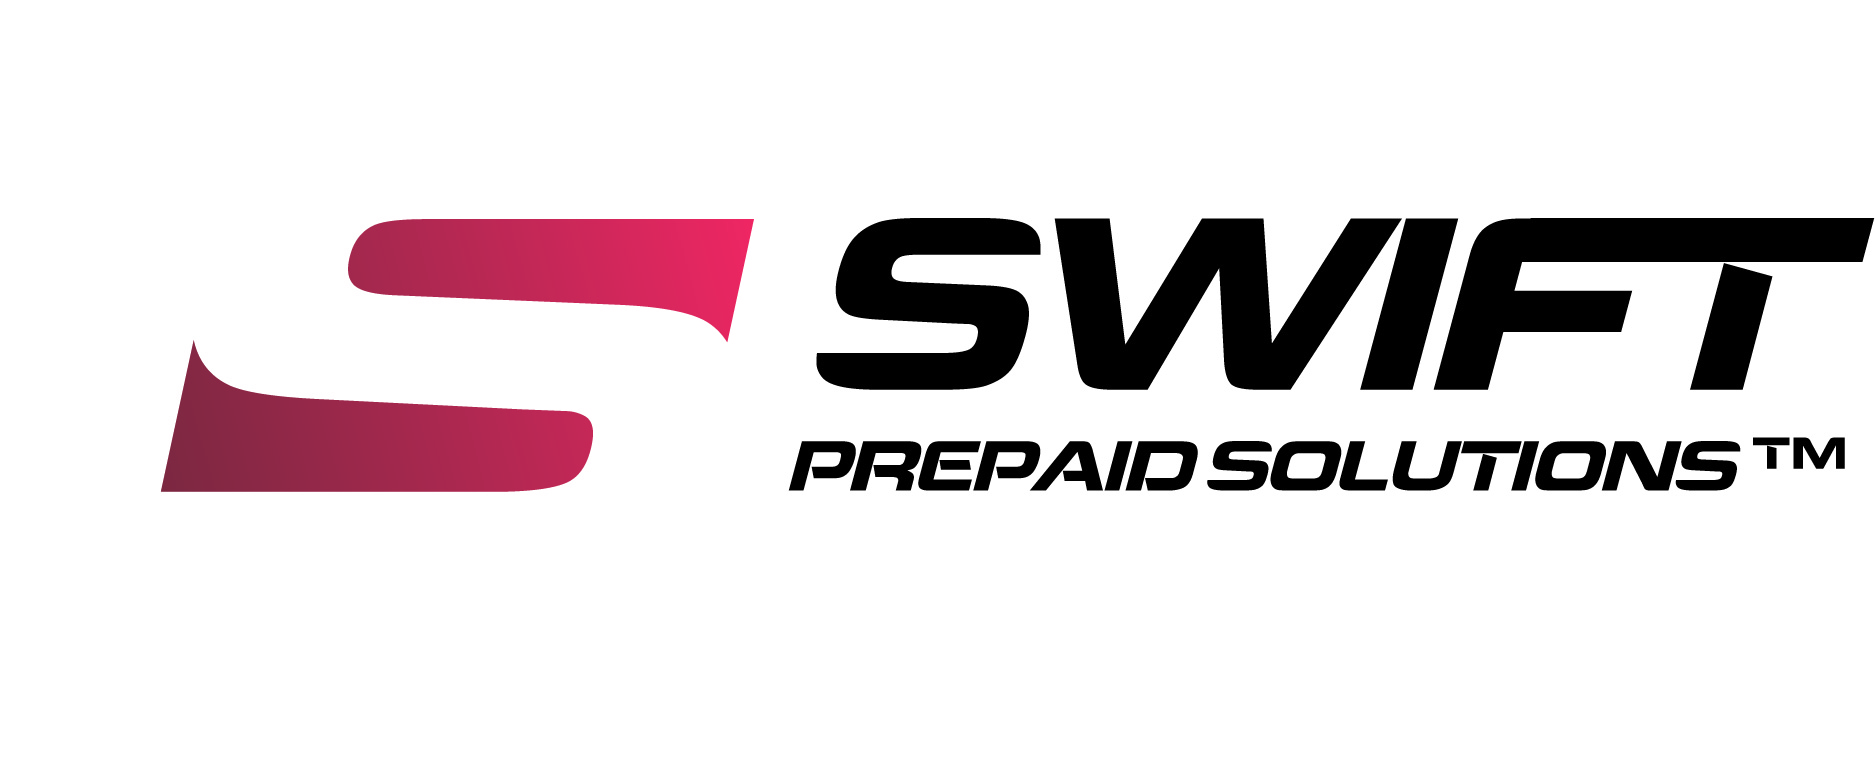 Swift Prepaid Solutions